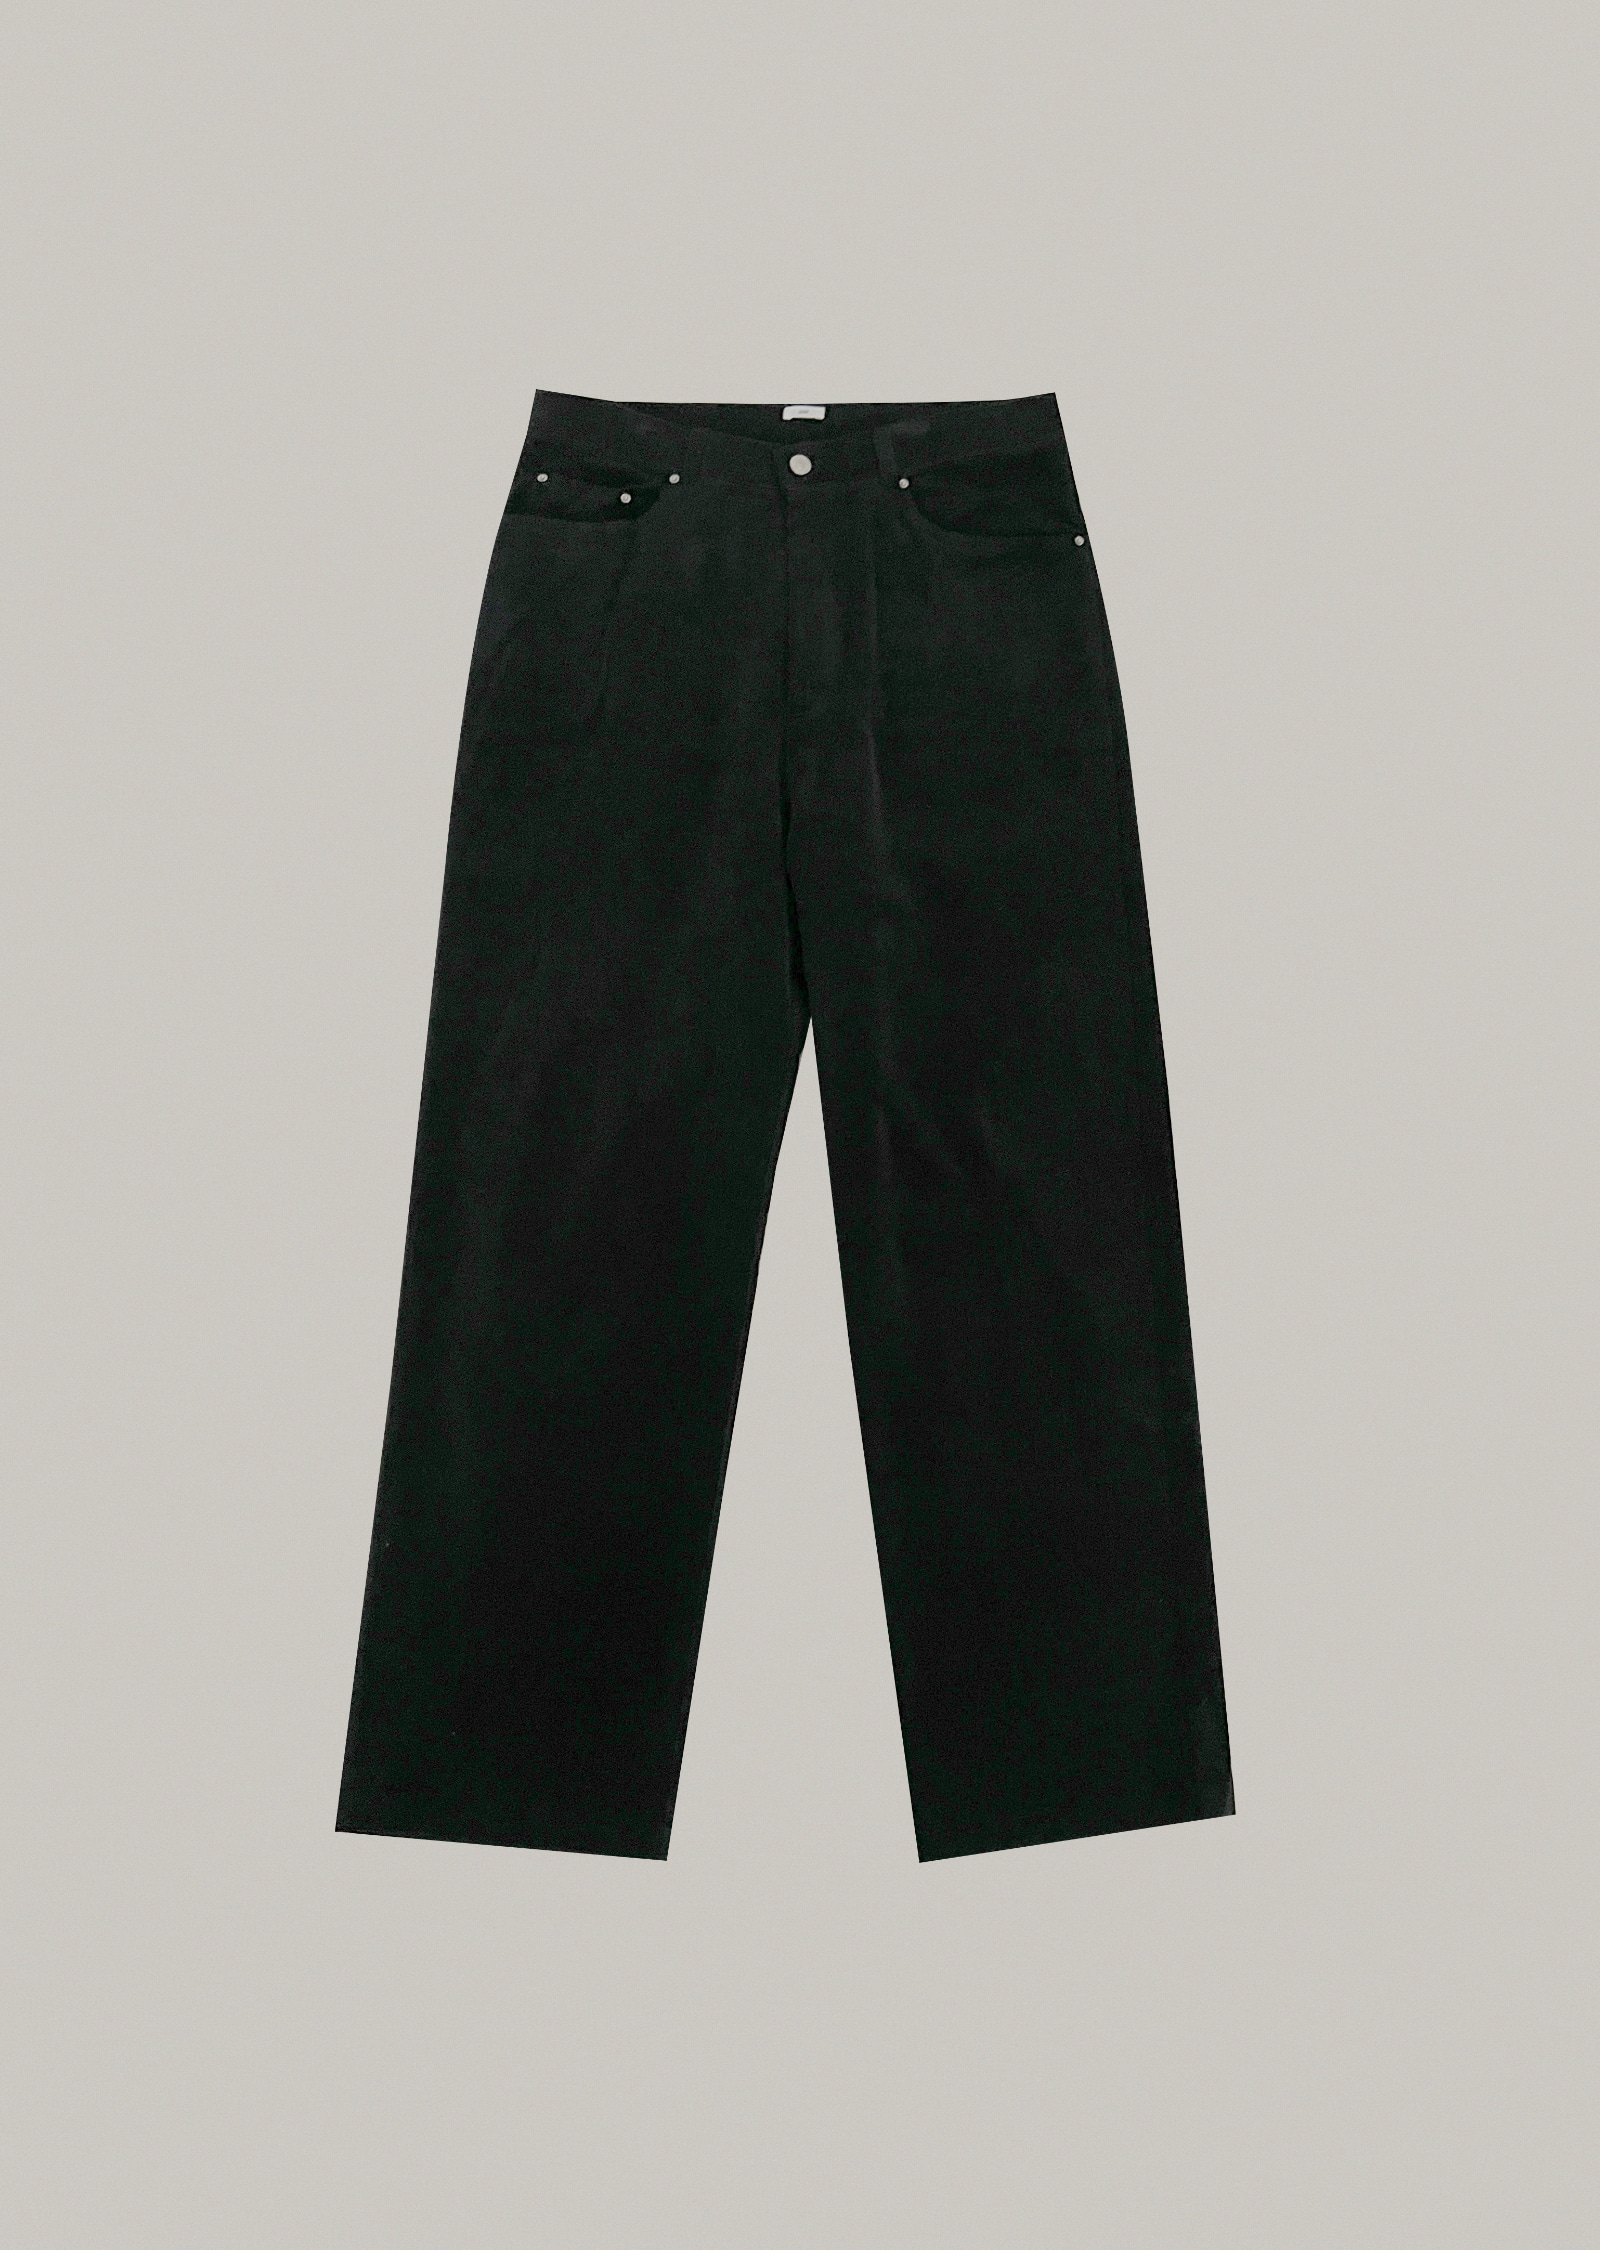 wide corduroy pants (black)